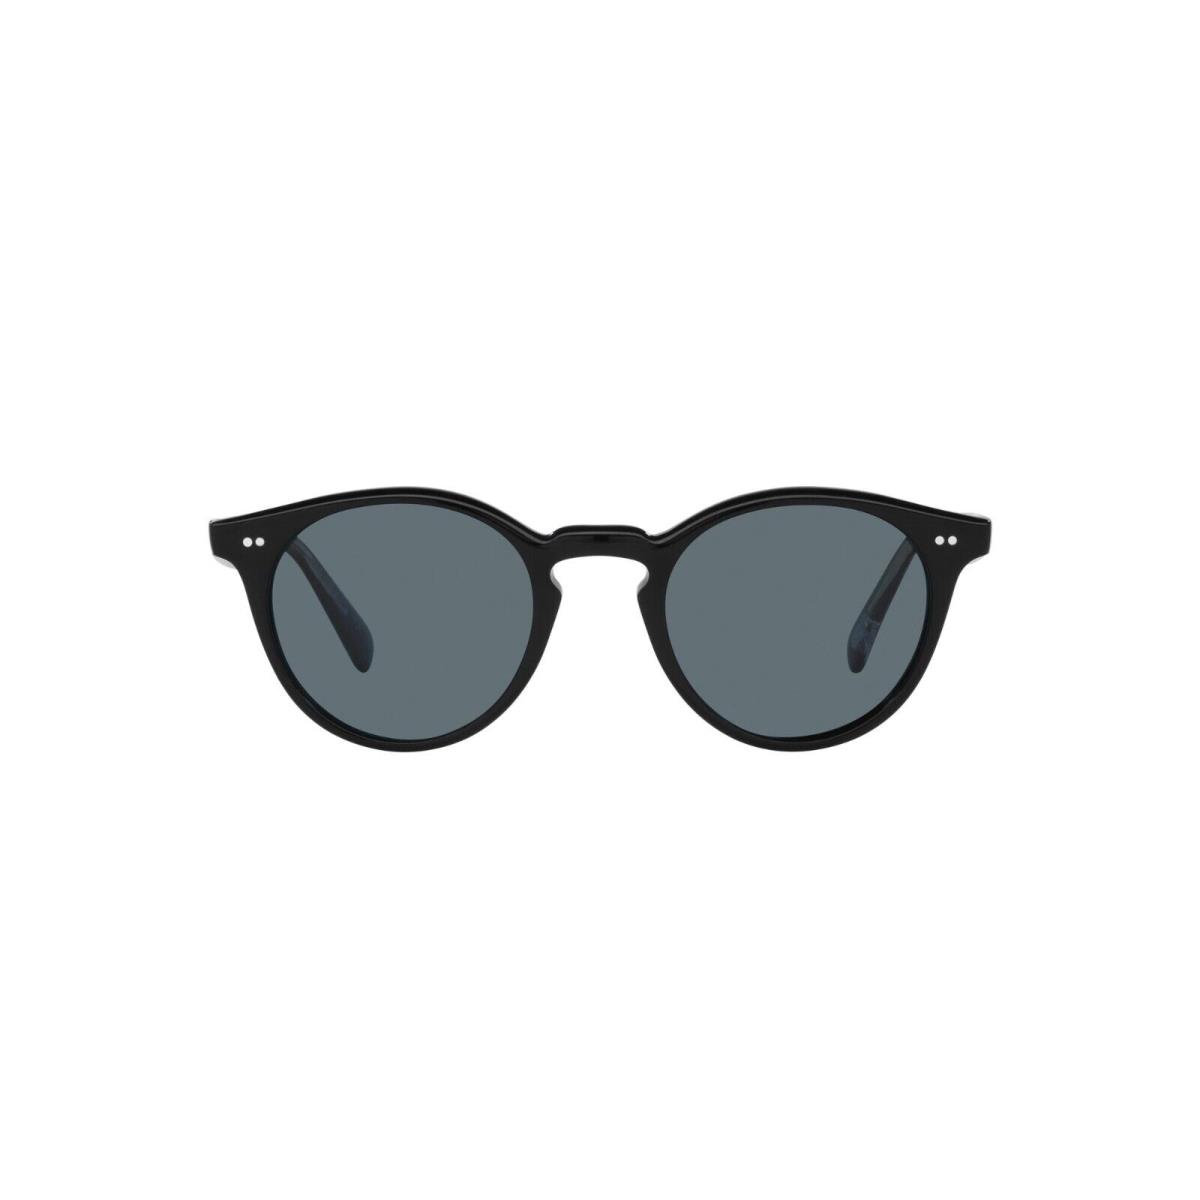 Oliver Peoples Romare Sun OV 5459SU Black/blue Polarized 1492/3R Sunglasses - Frame: Black, Lens: Blue Polarized